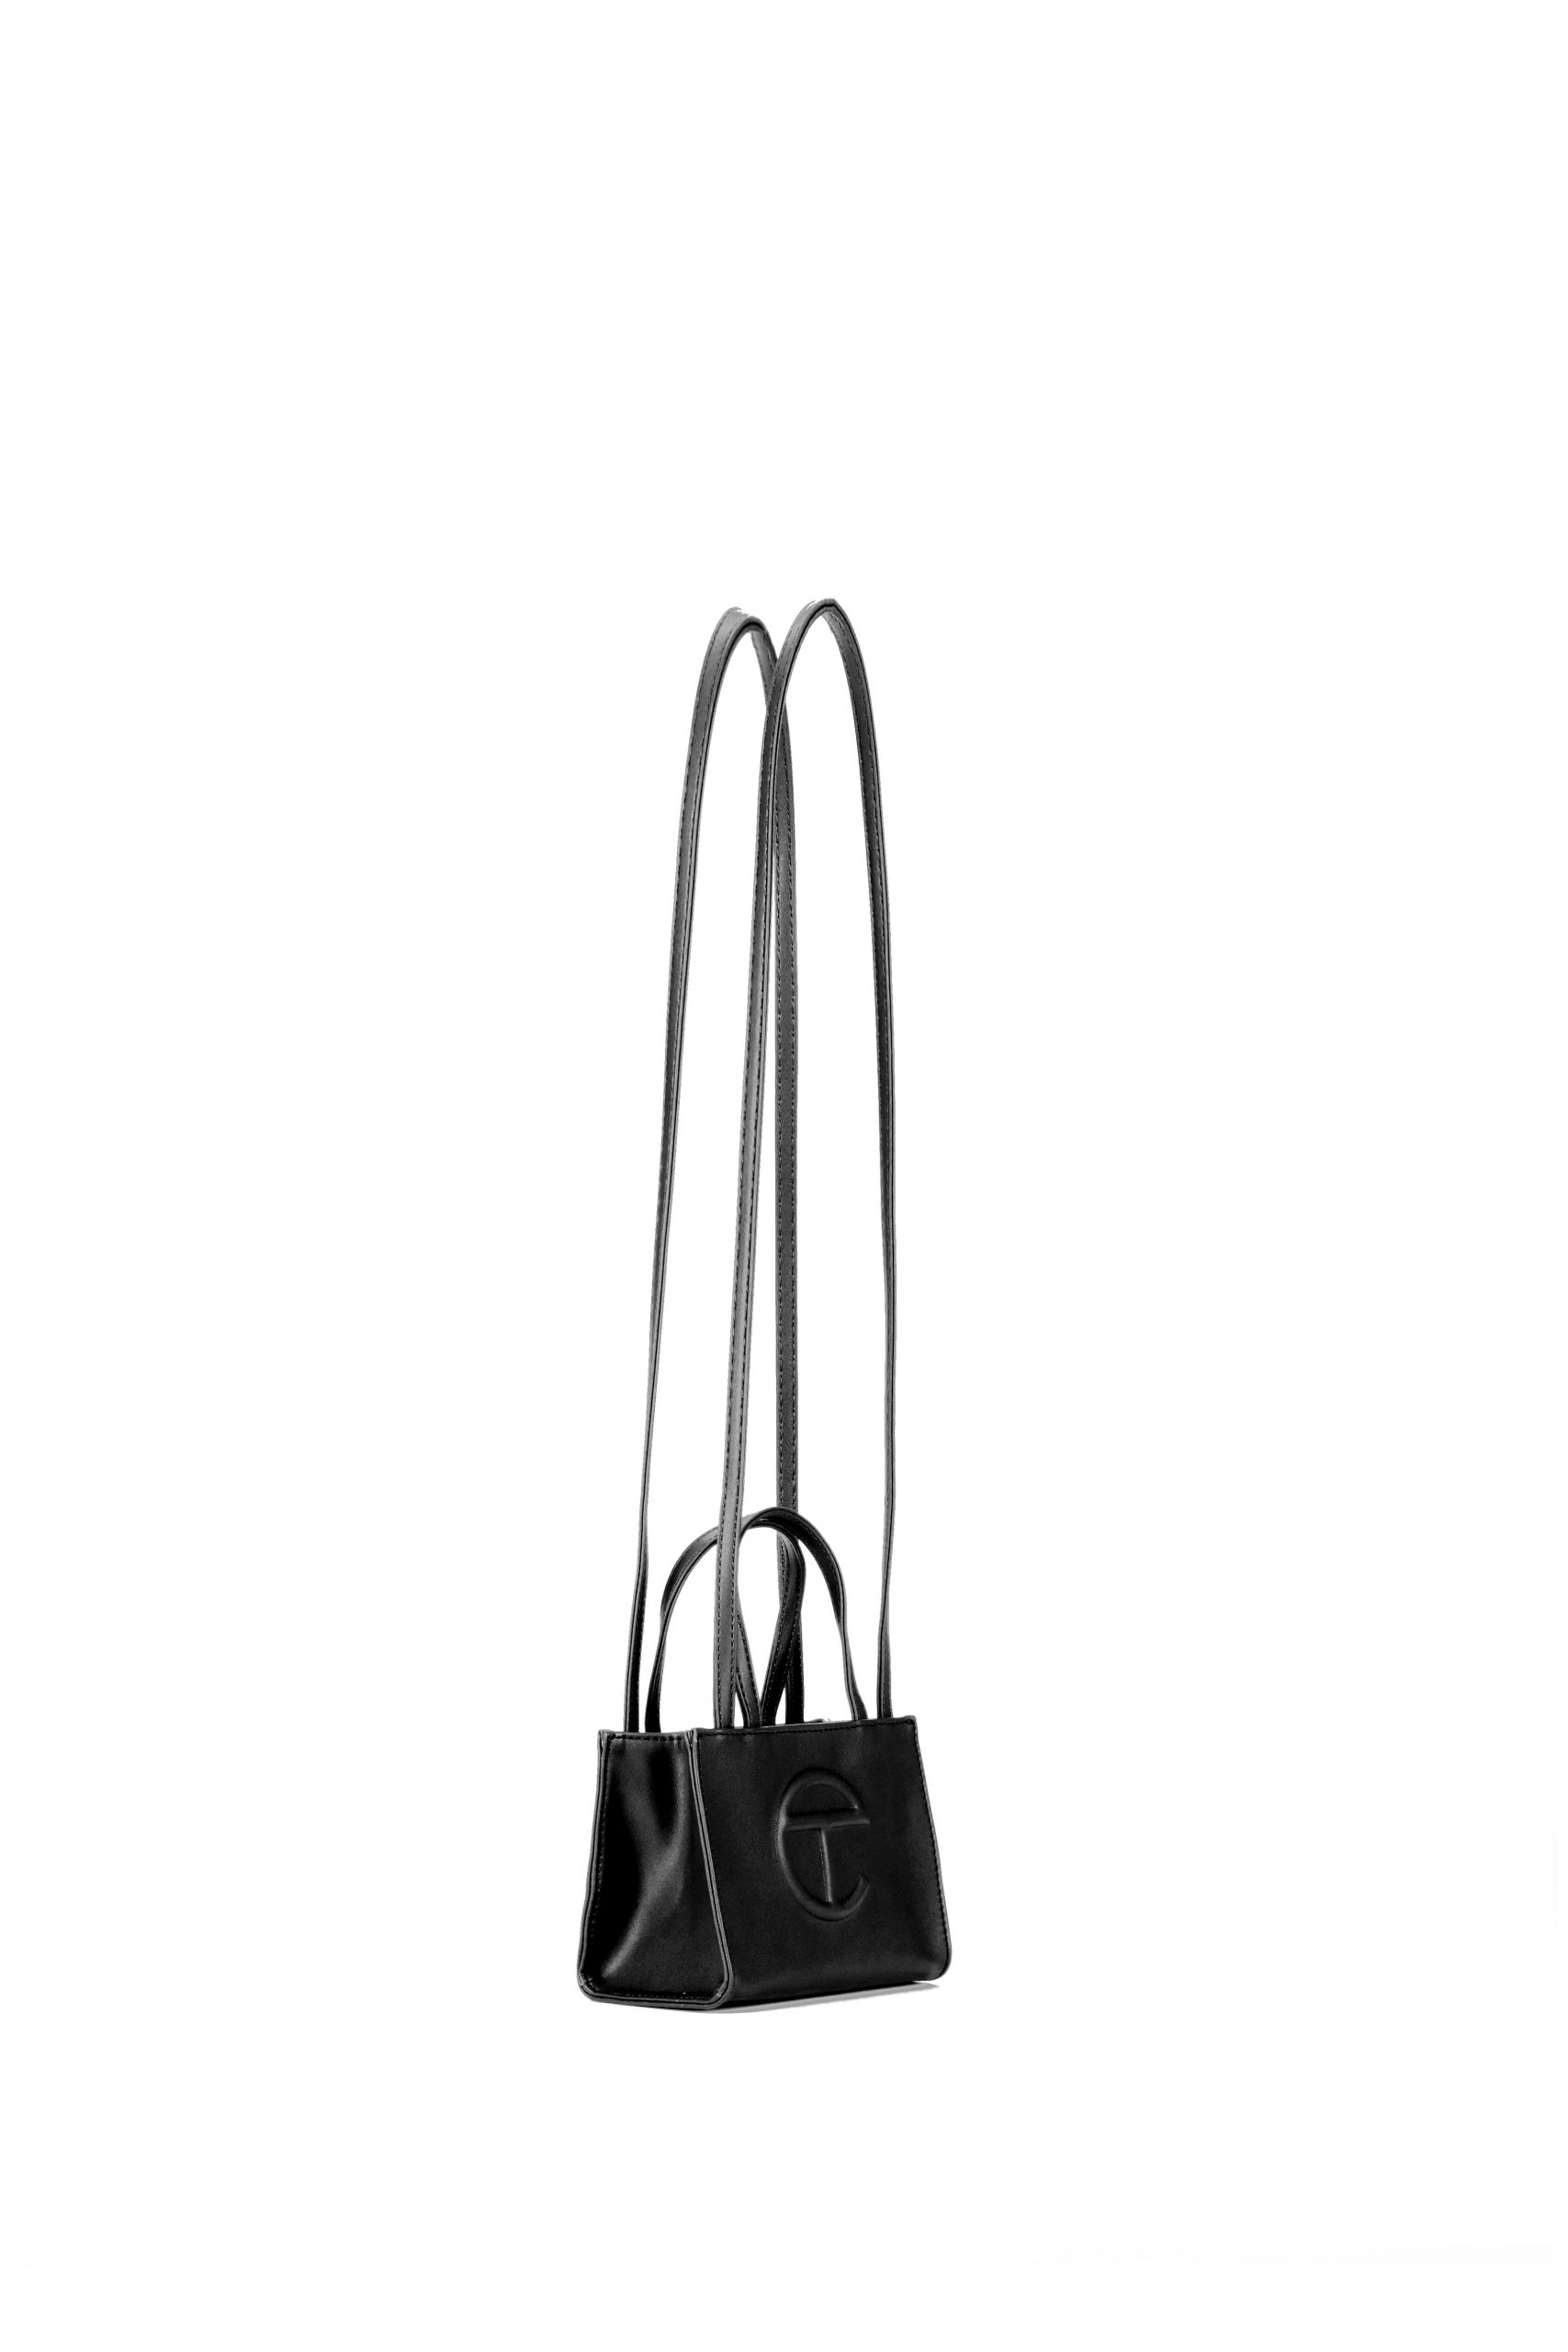 Small Black Shopping Bag